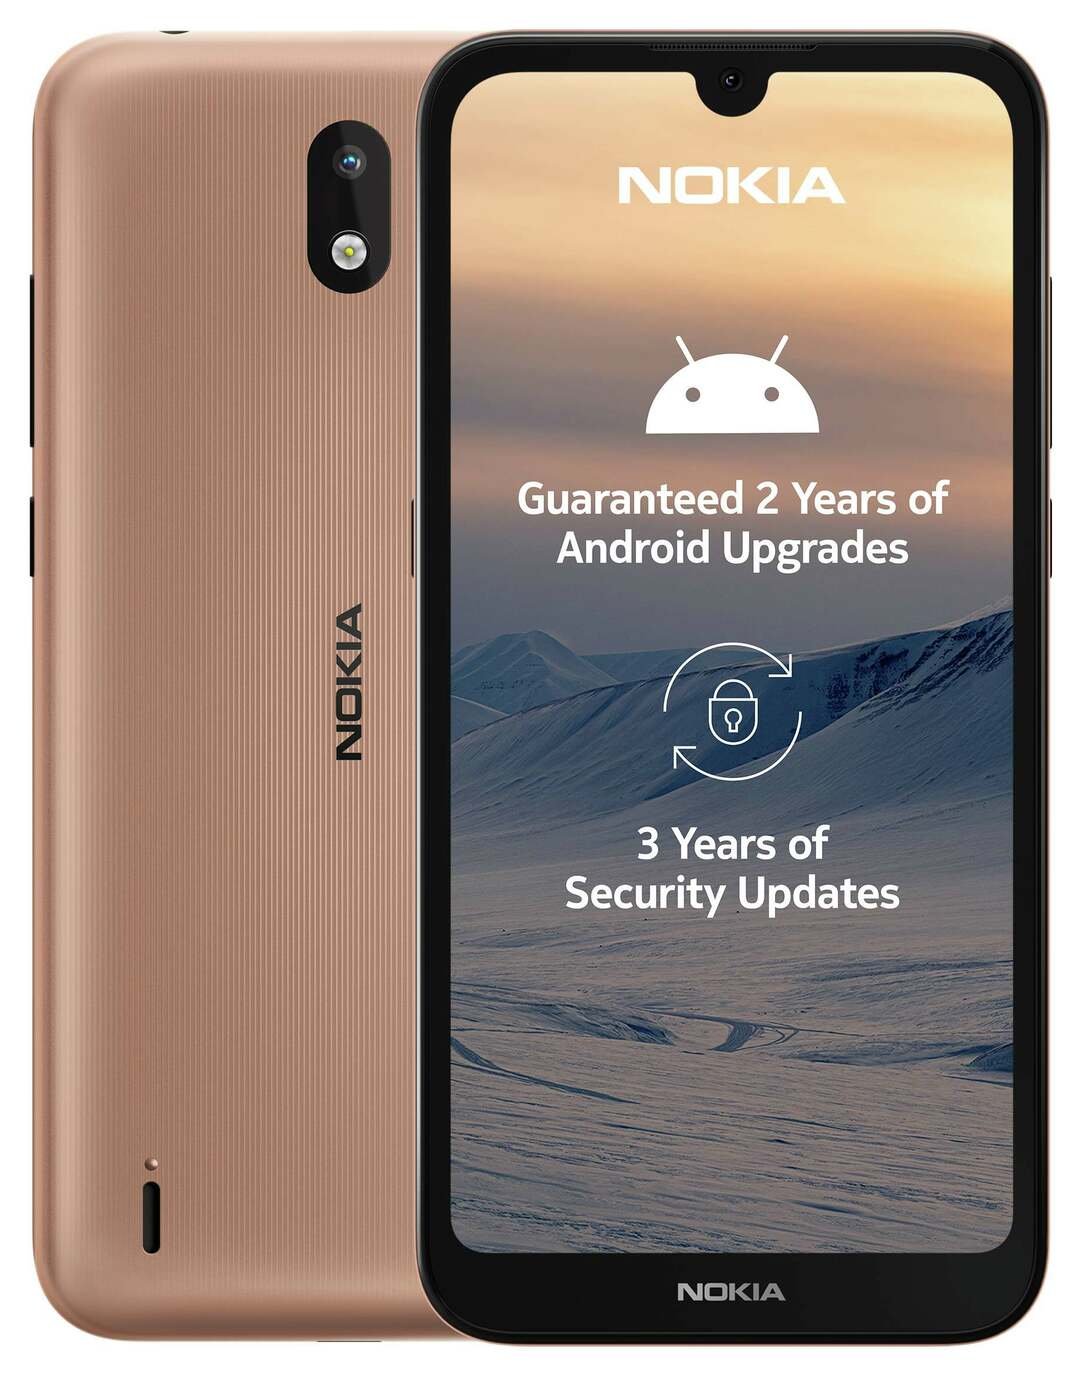 SIM Free Nokia 1.3 16GB Mobile Phone Review